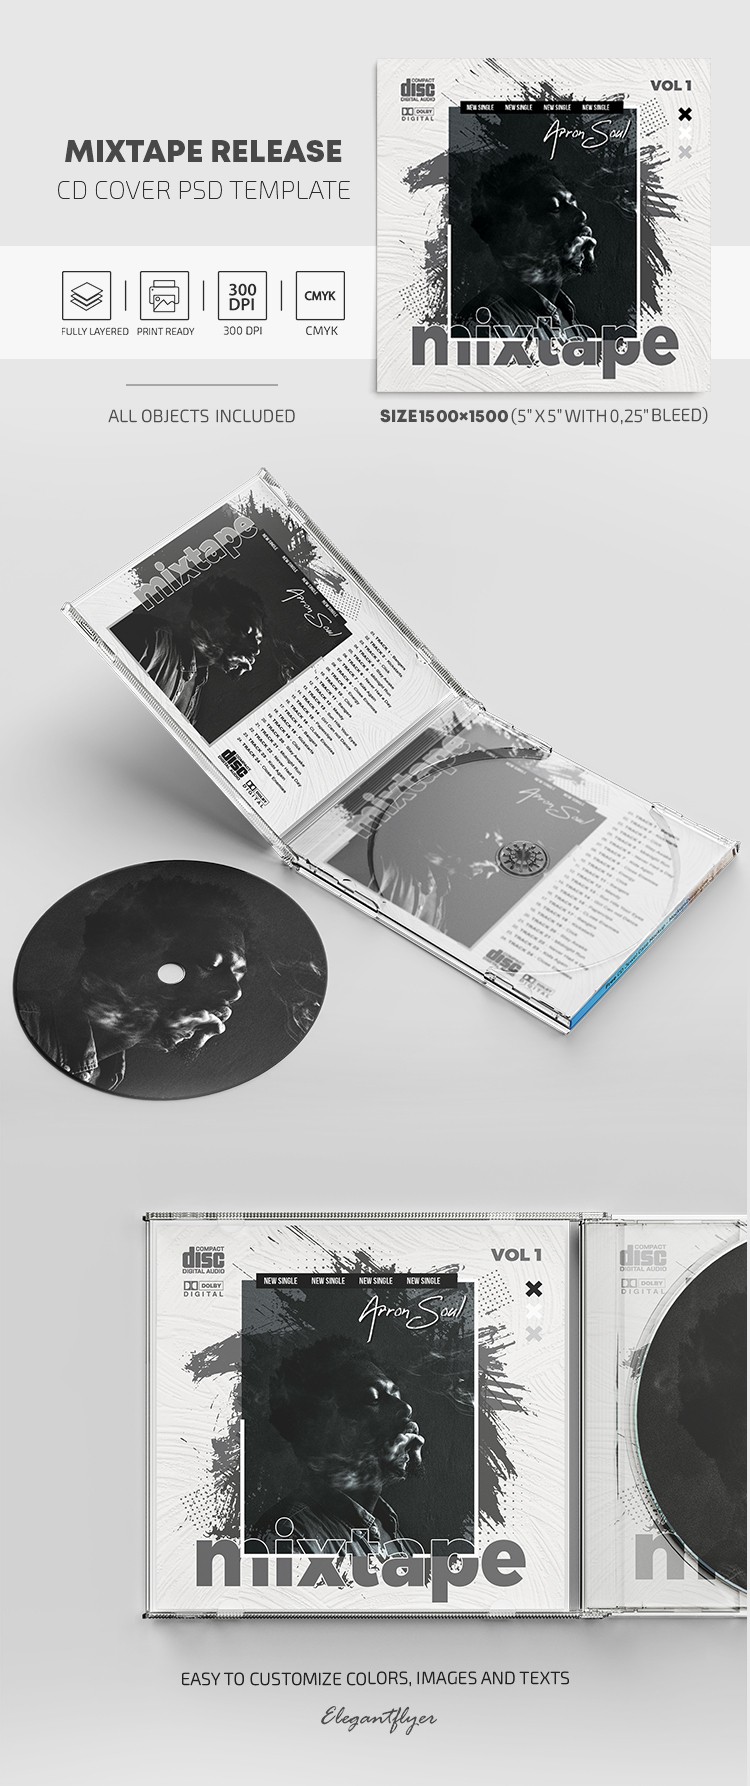 Mixtape-Veröffentlichung CD-Cover by ElegantFlyer